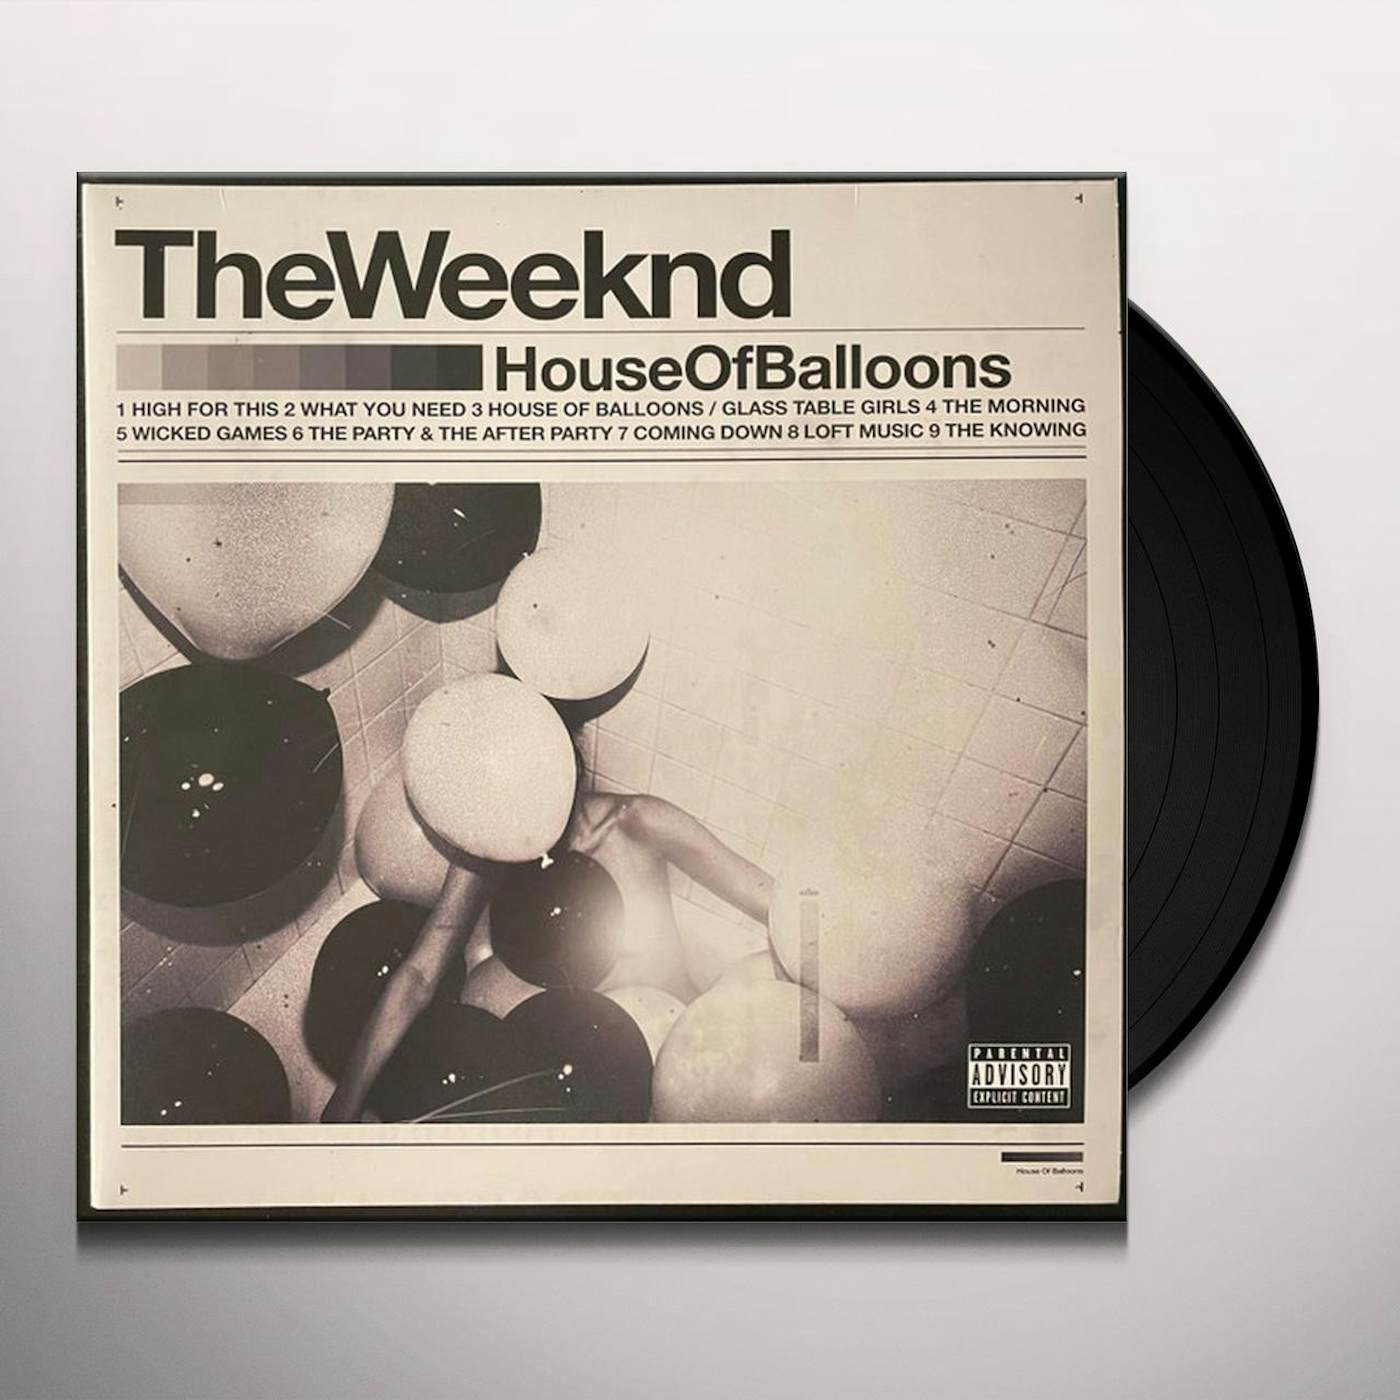 The Weeknd Kiss Land 2LP (Seaglass Vinyl)